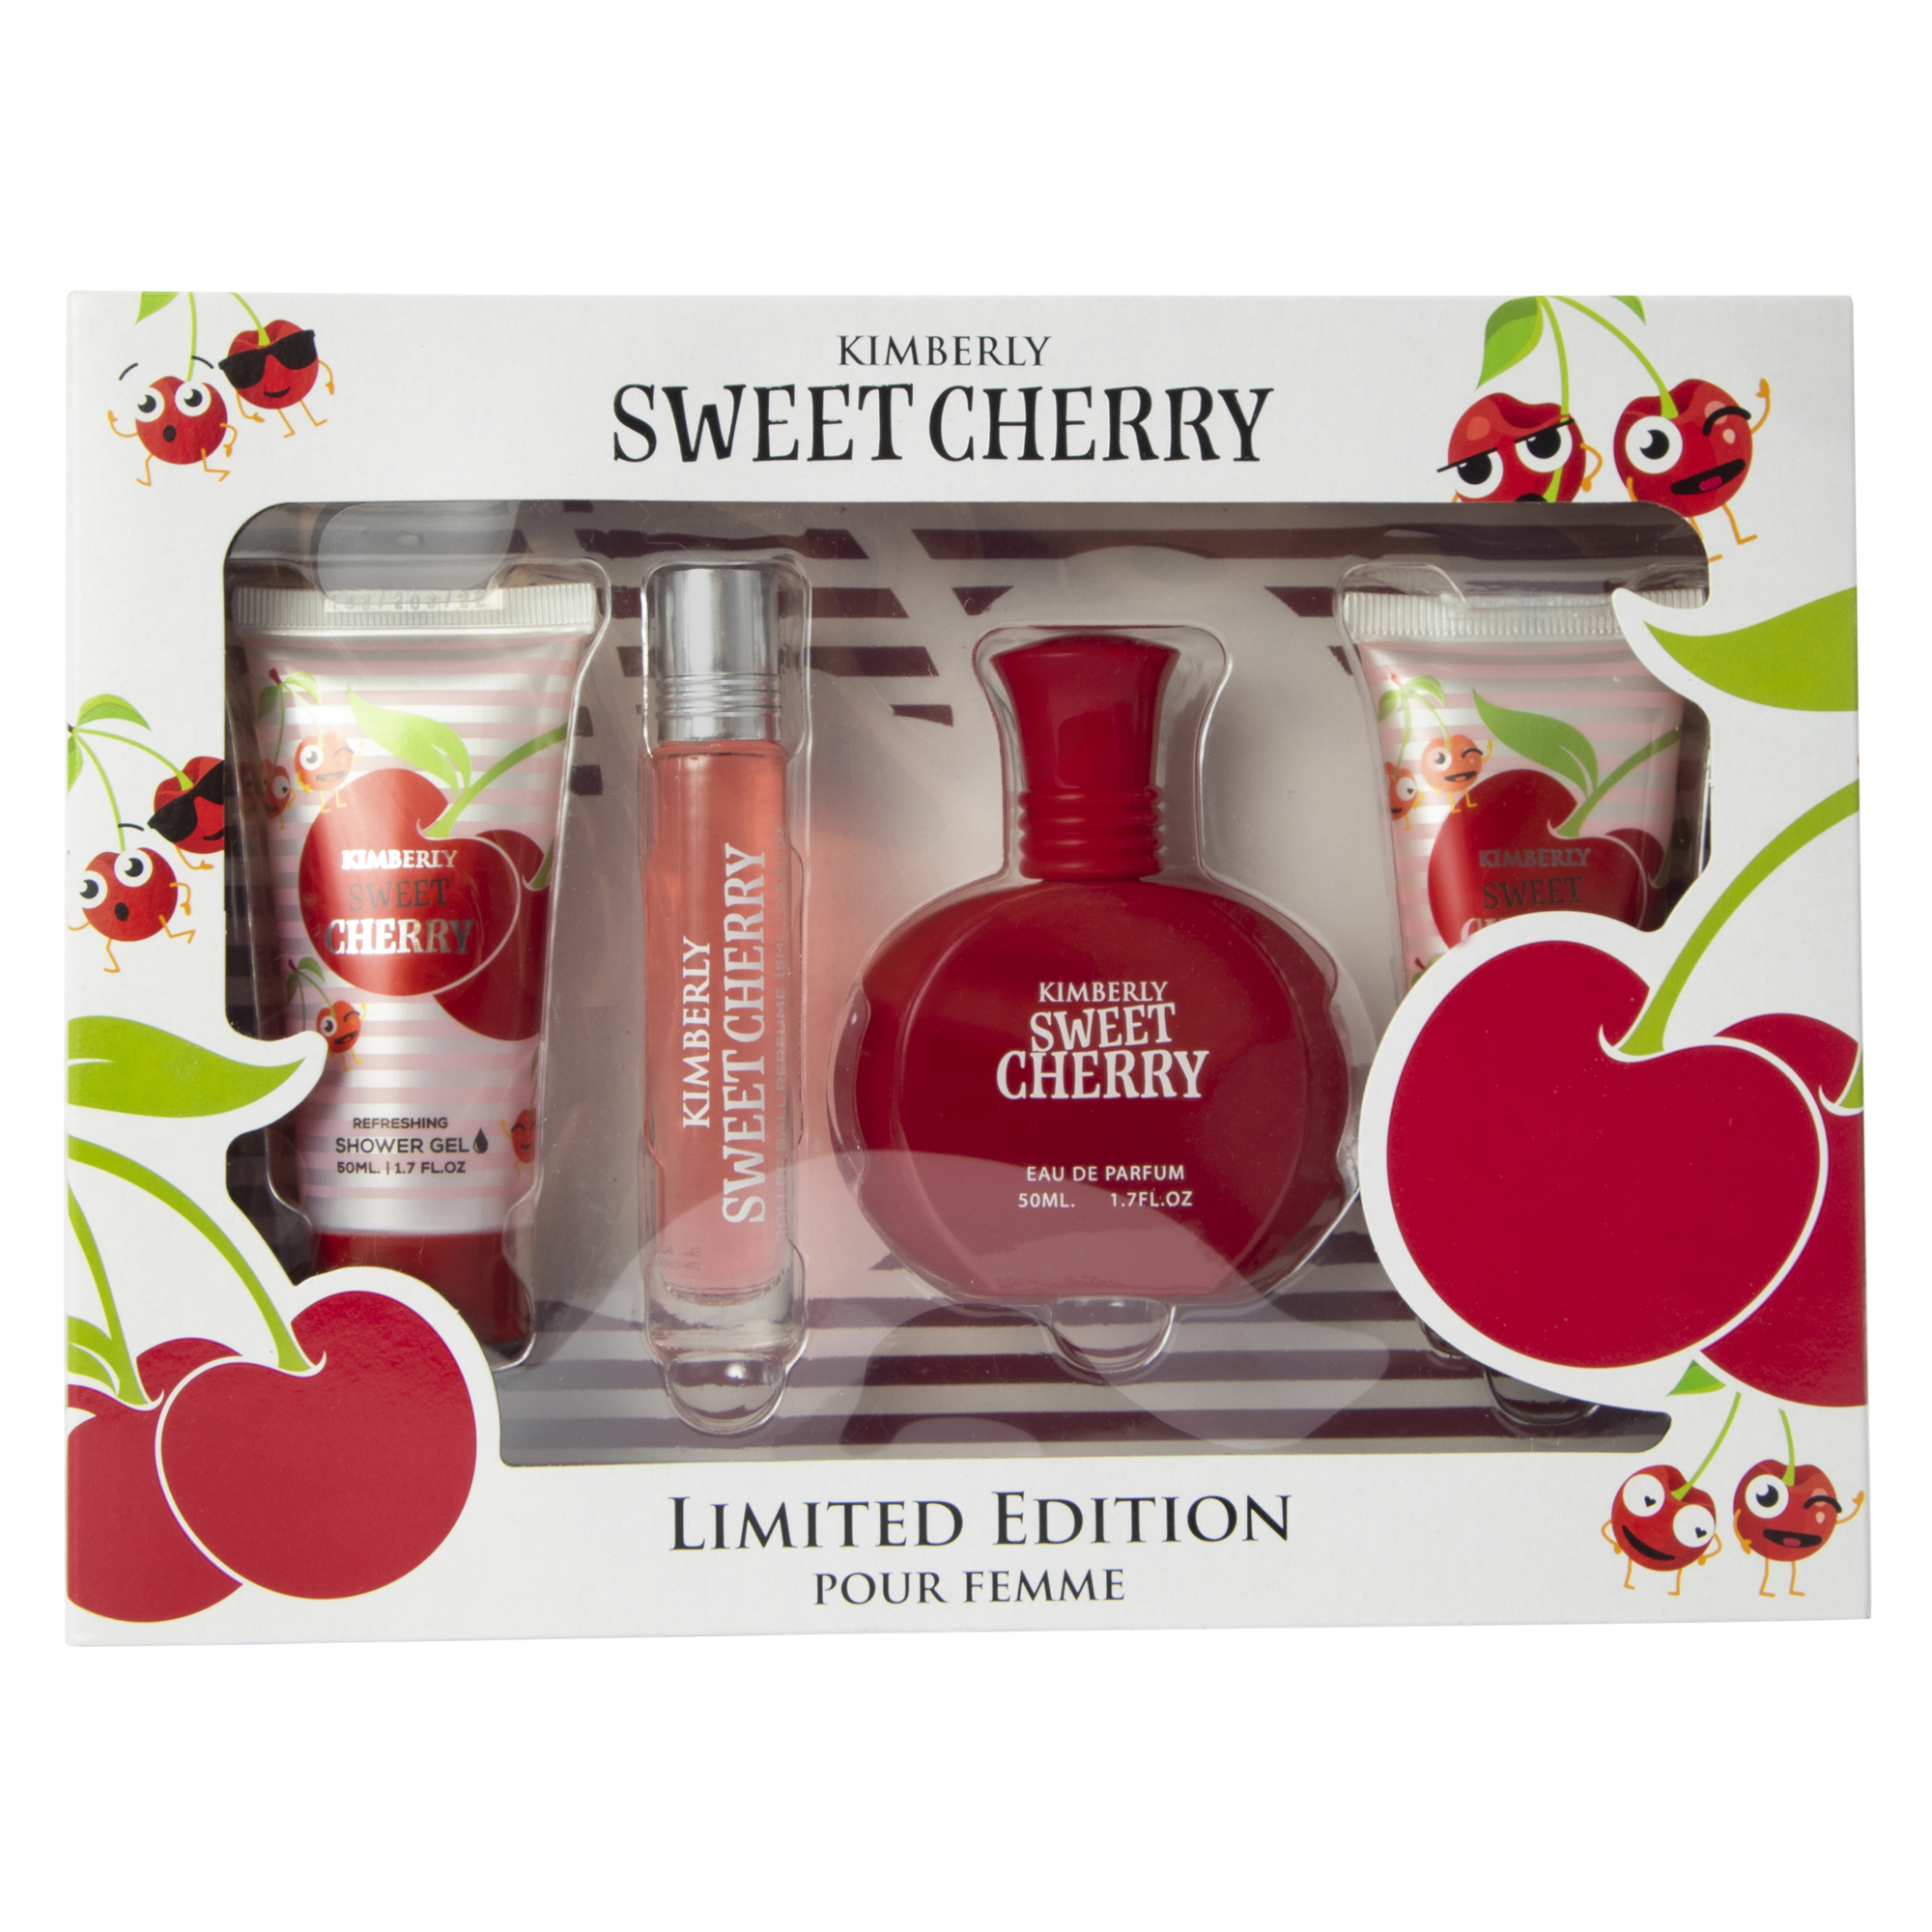 kimberly sweet cherry limited edition bath & body set 4-piece